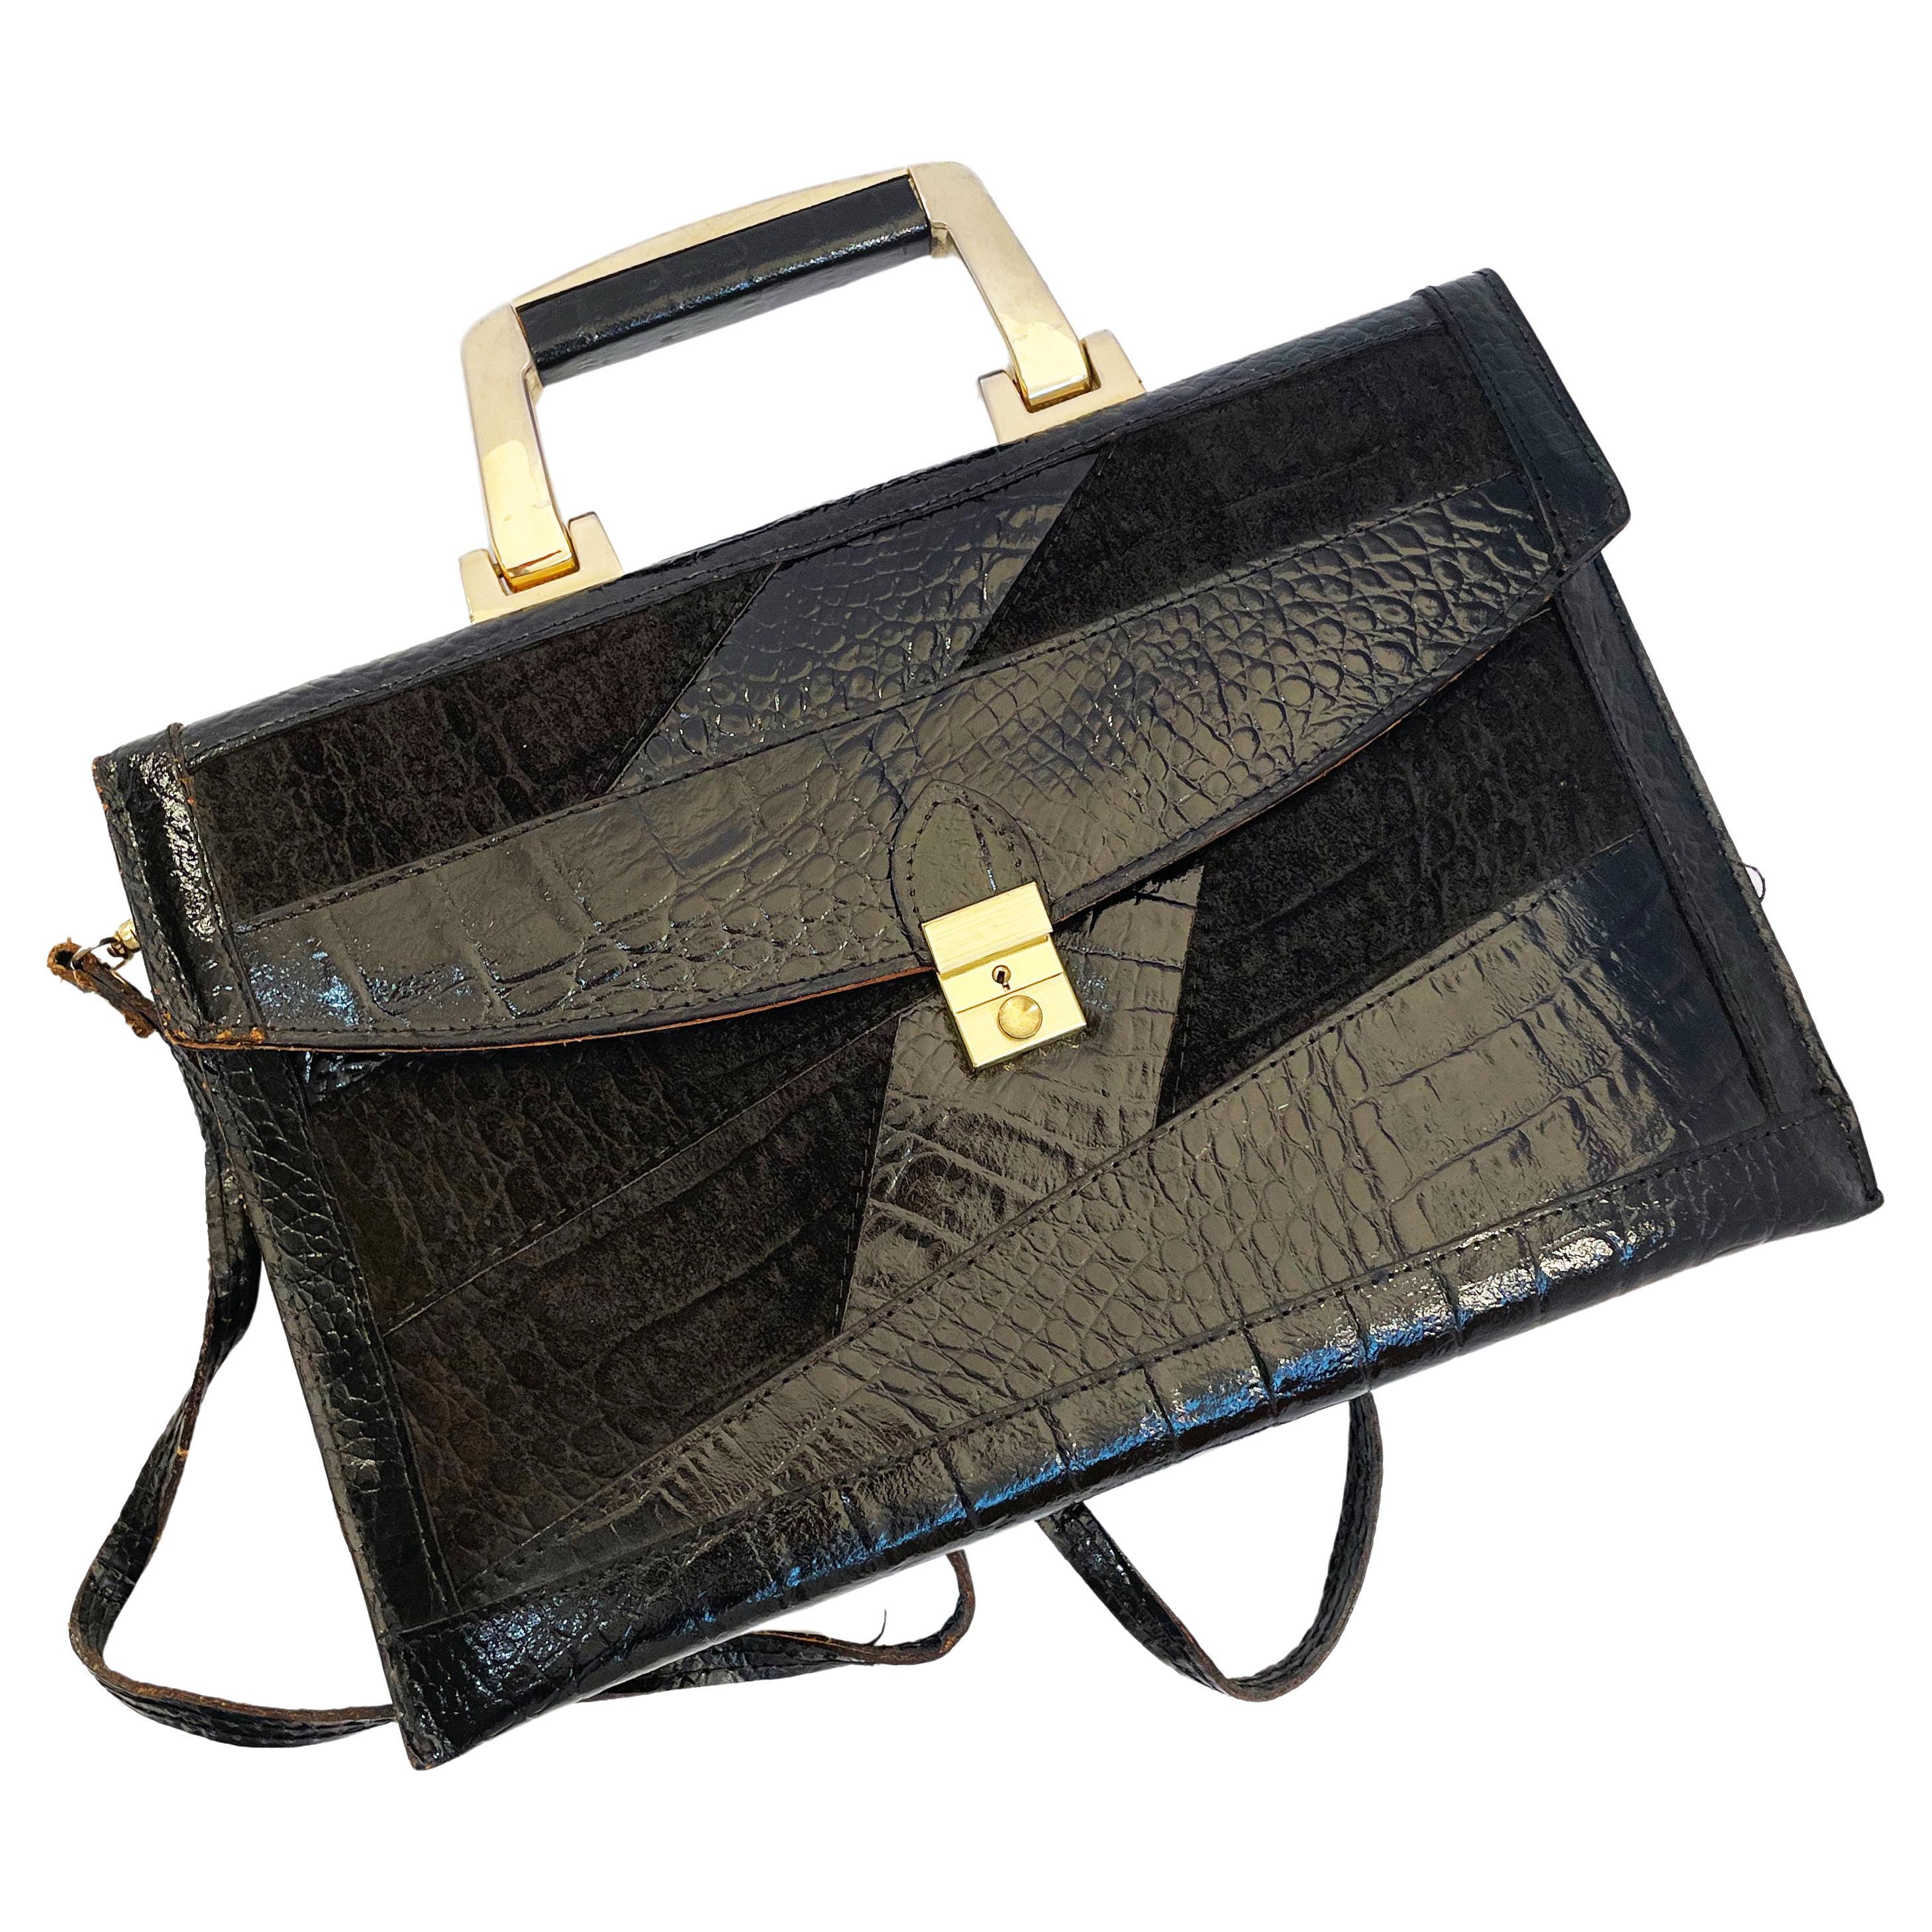 Vintage Portfolio Bag Croc Embossed Patent and Suede Leather